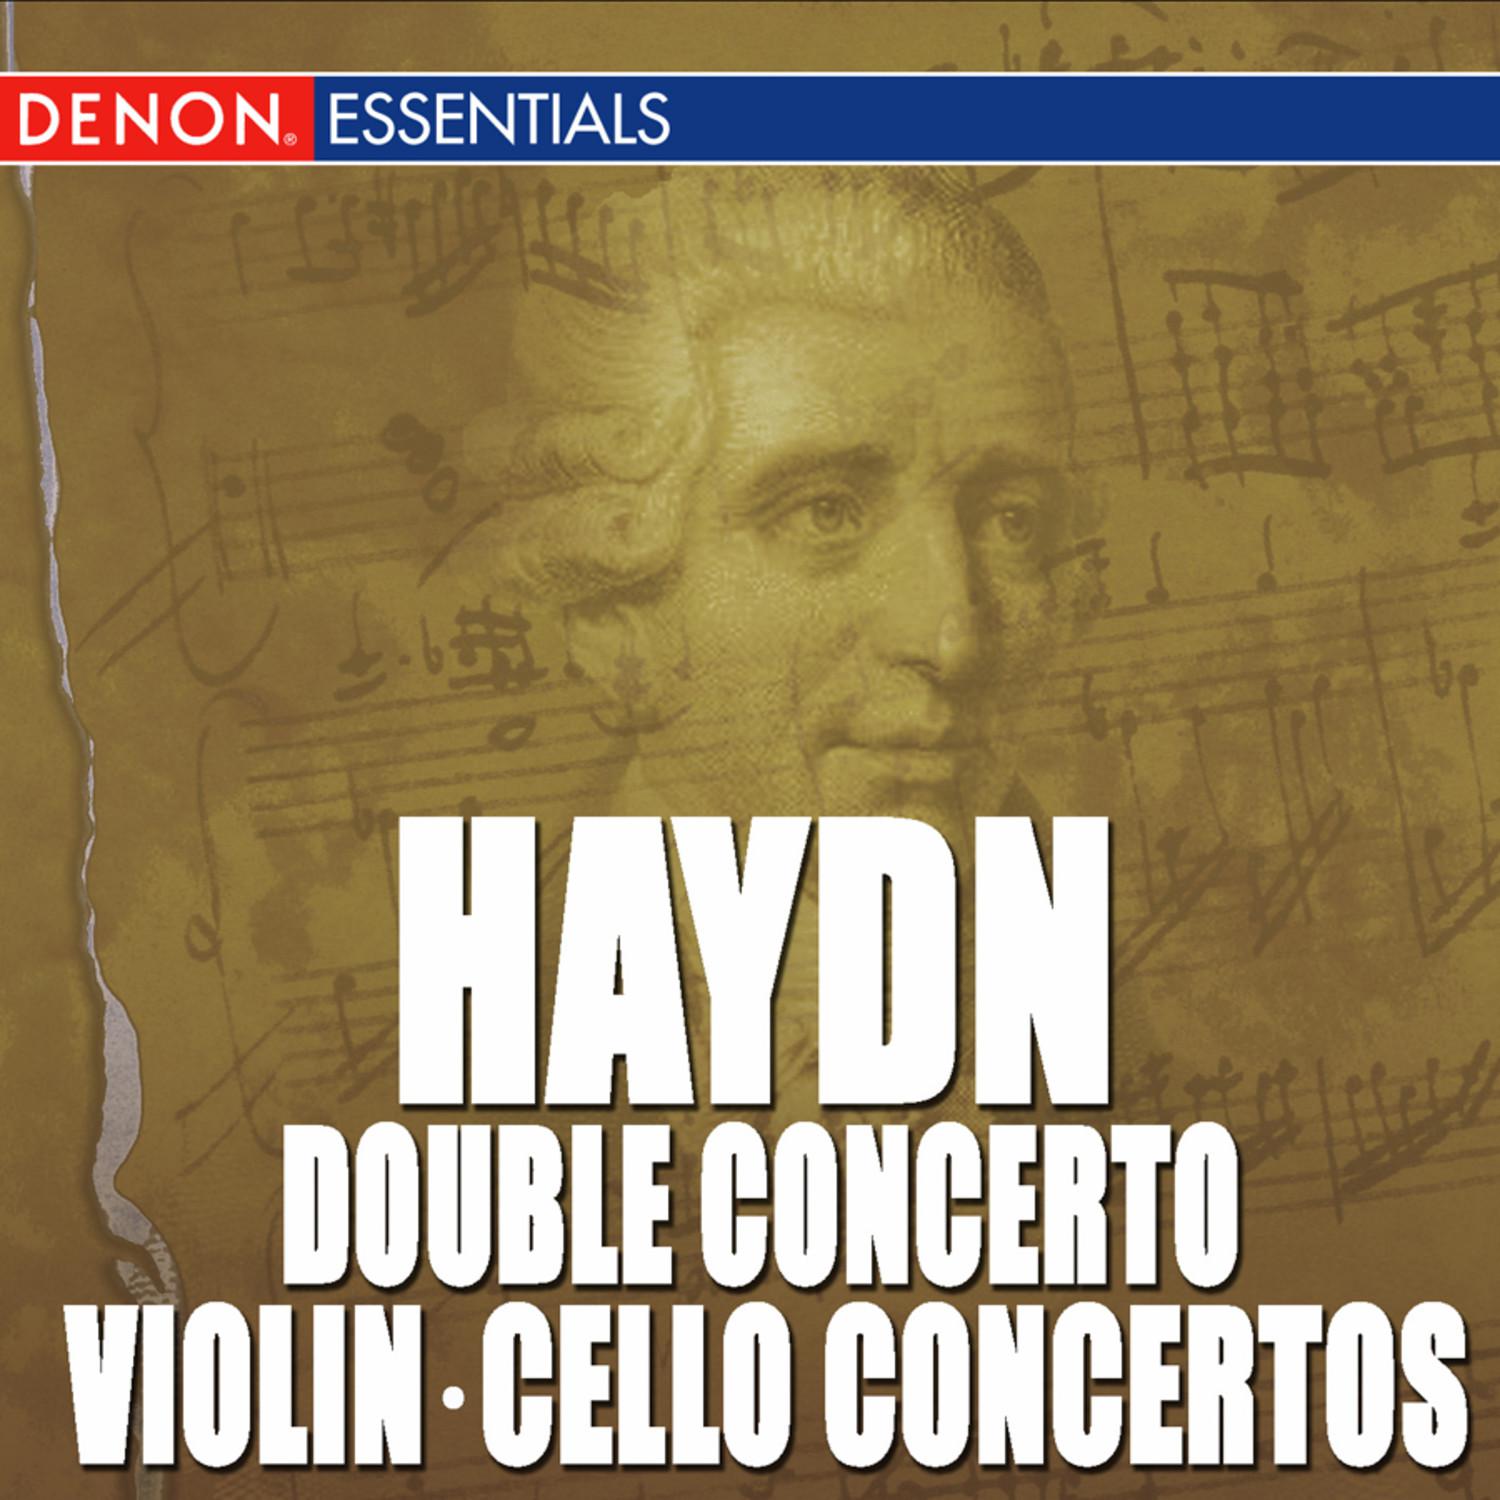 Concerto for Violoncello & Strings No. 2 in D major: III. Rondo - Allegro